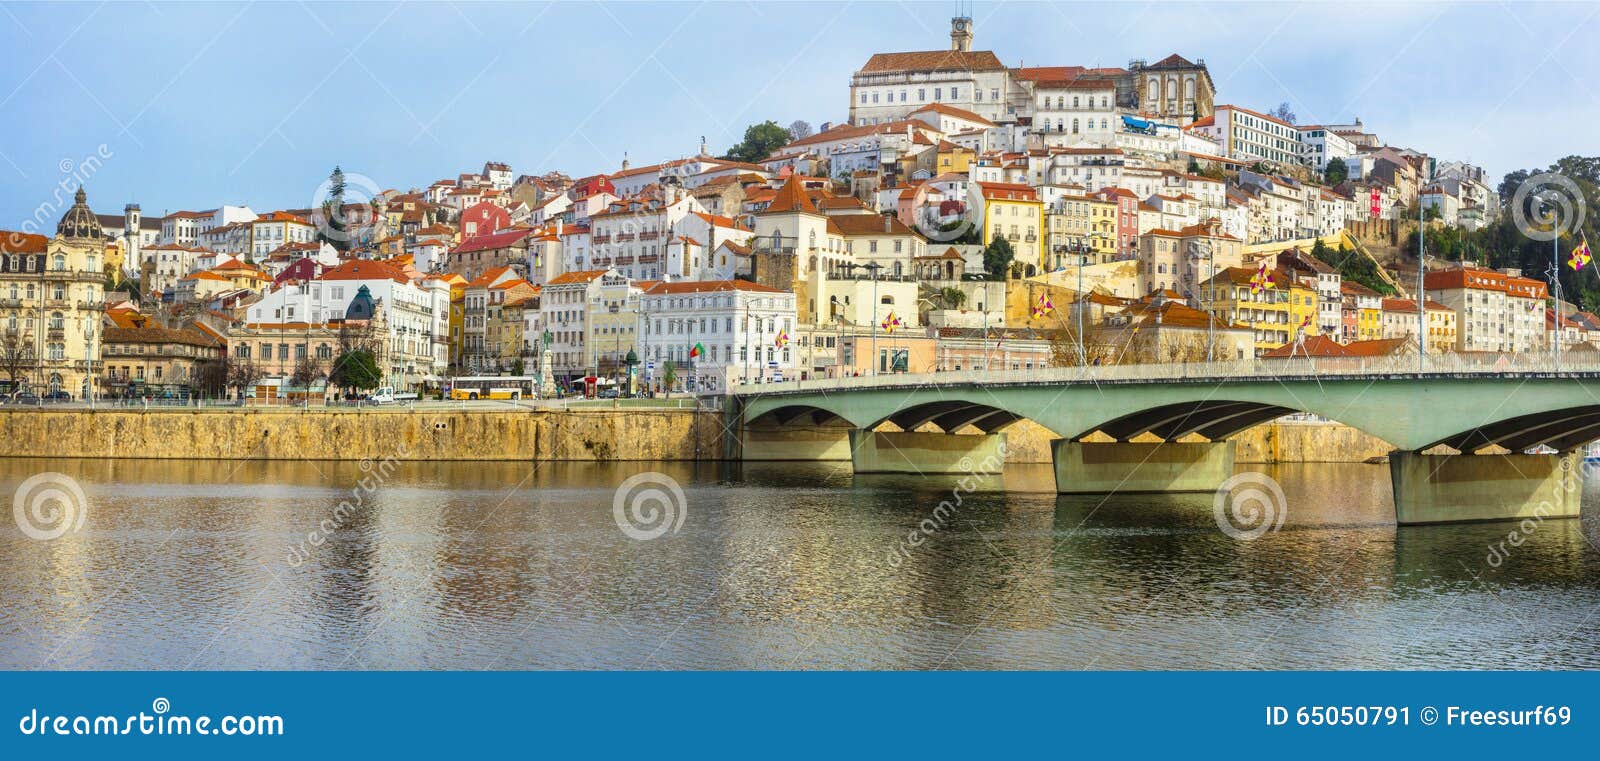 beautiful coimbra town, portugal